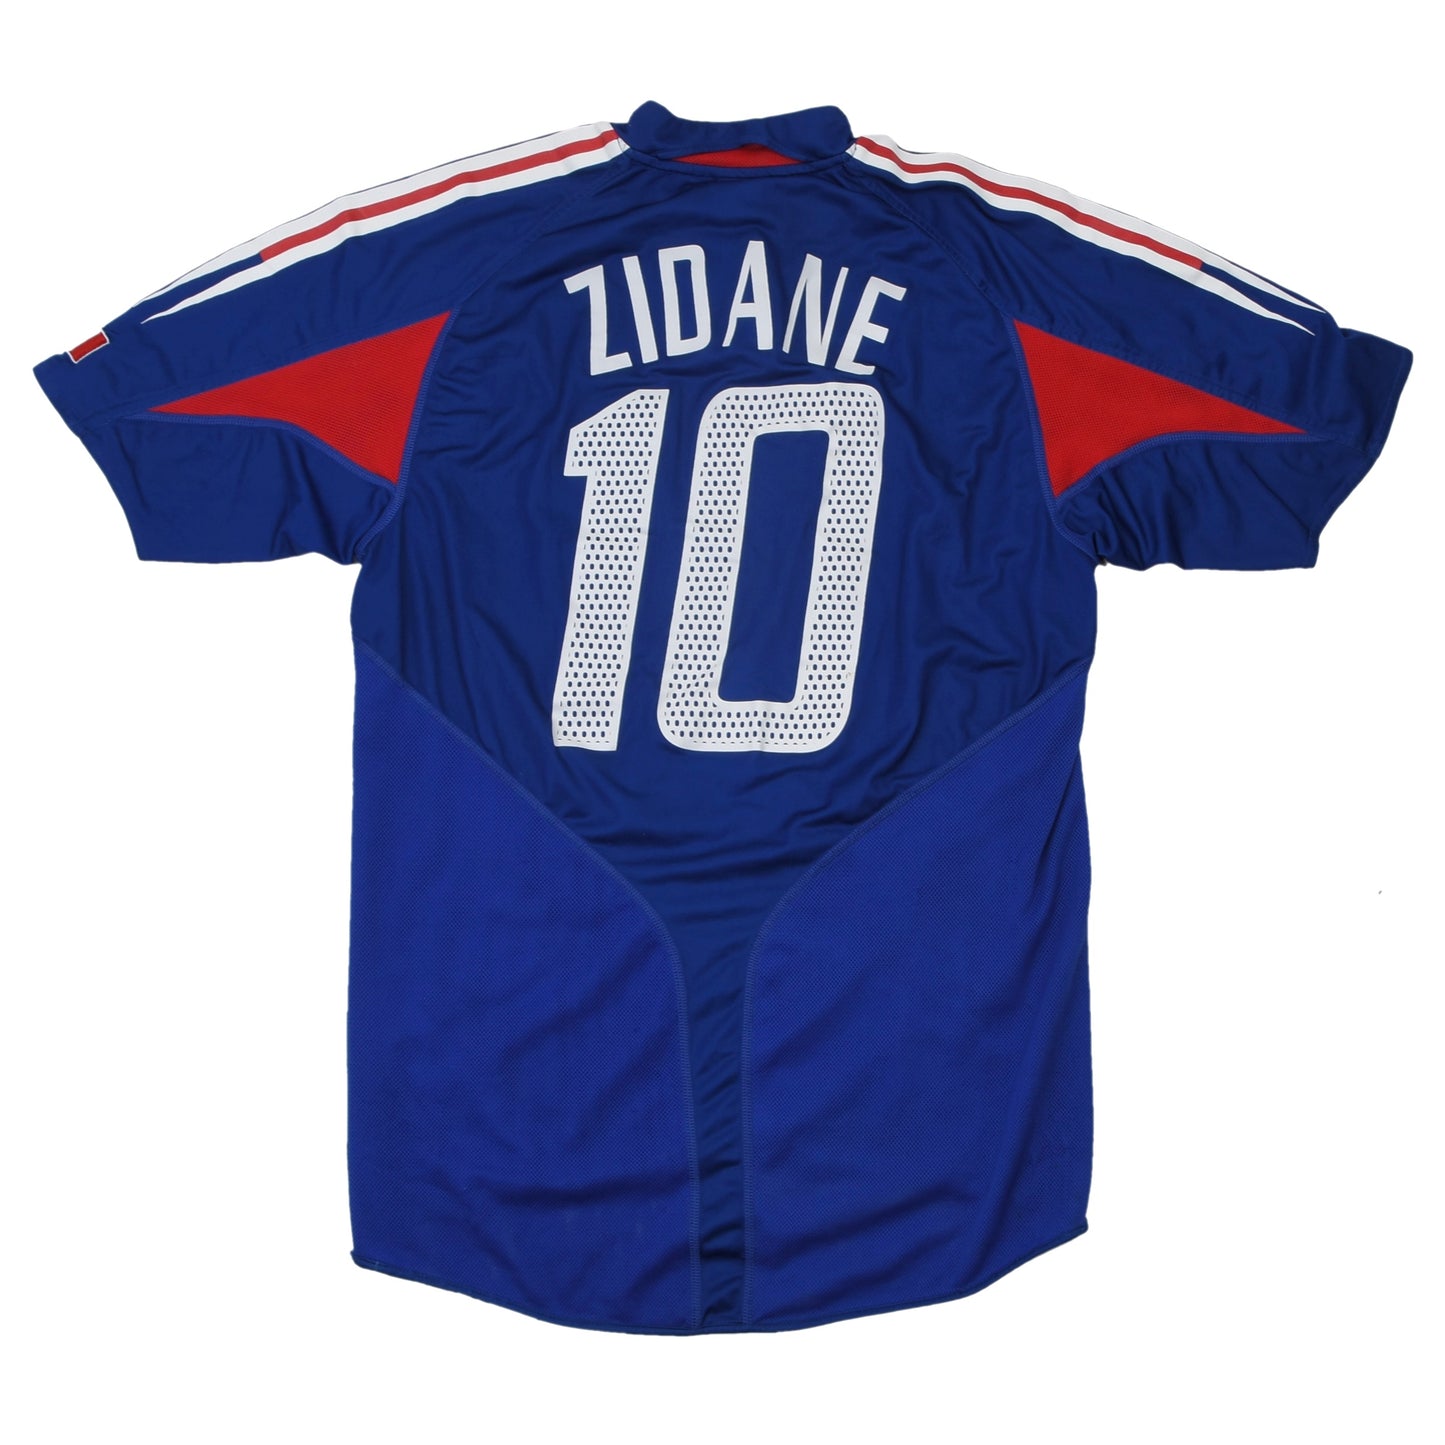 Adidas France 2004-2006 Home Jersey #10 Zidane Size M - Blue